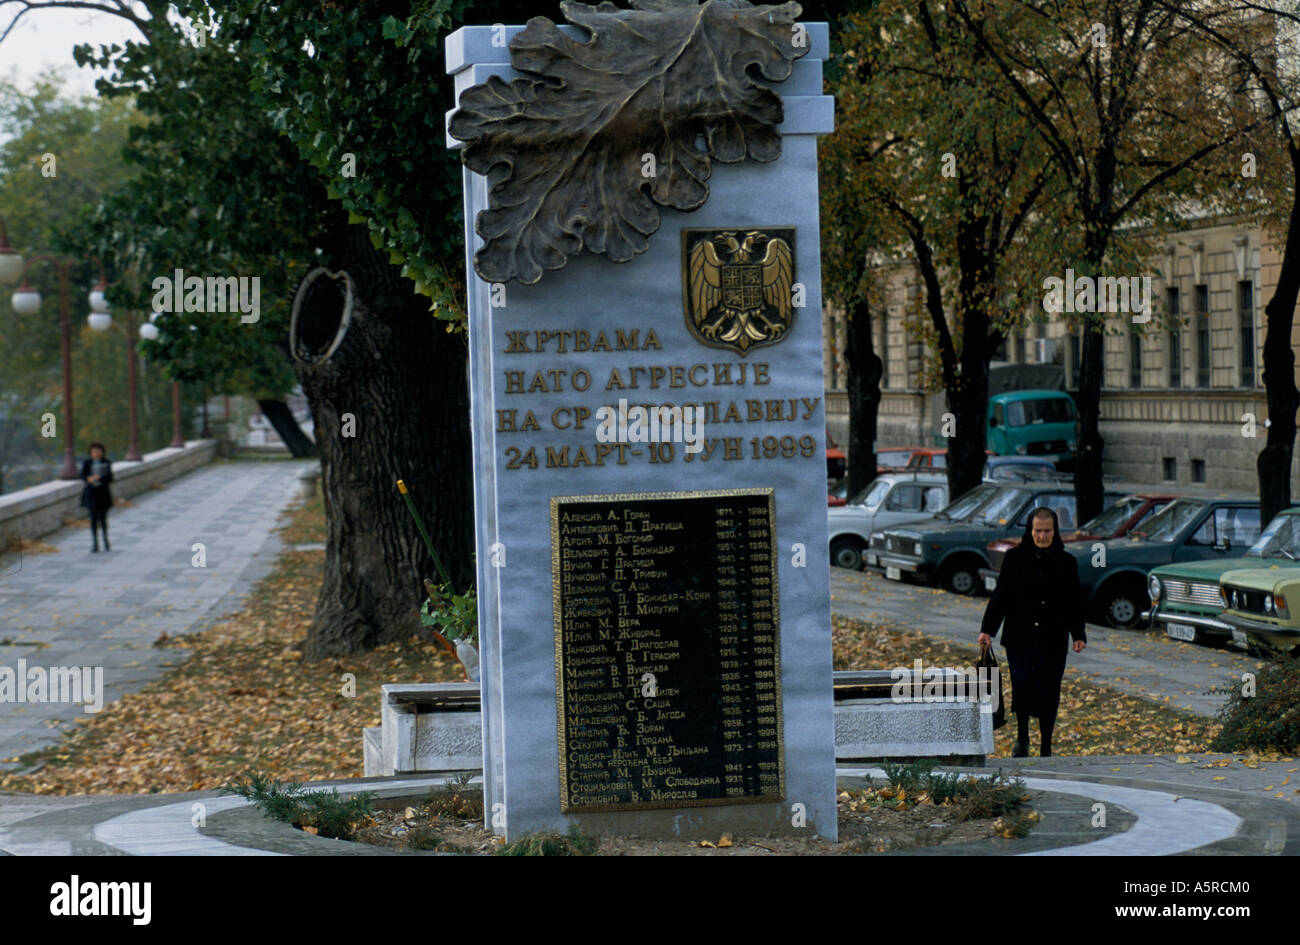 MEDITERRENEAN BORDERS MEMORIAL TO VICTIMS OF NATO AGGRESSION IN THE 1999 BOMBING CAMPAIGN OVER SERBIA Stock Photo